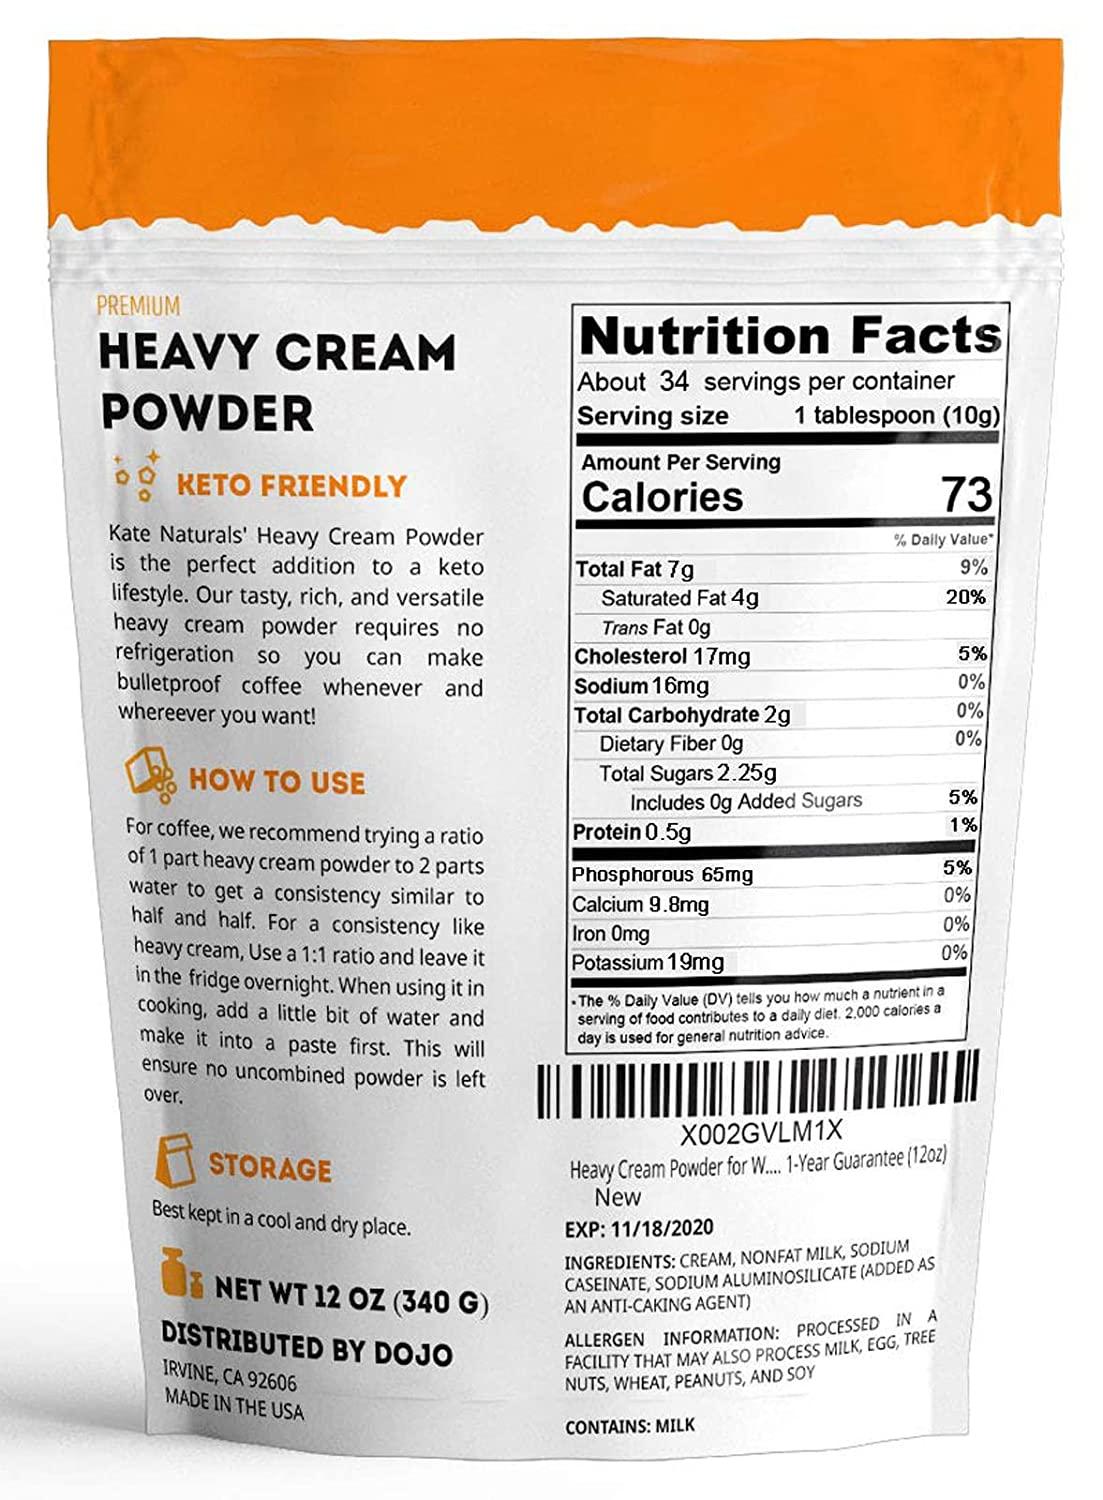 Heavy Cream Powder for Coffee & Heavy Whipping Cream (12oz) - Kate